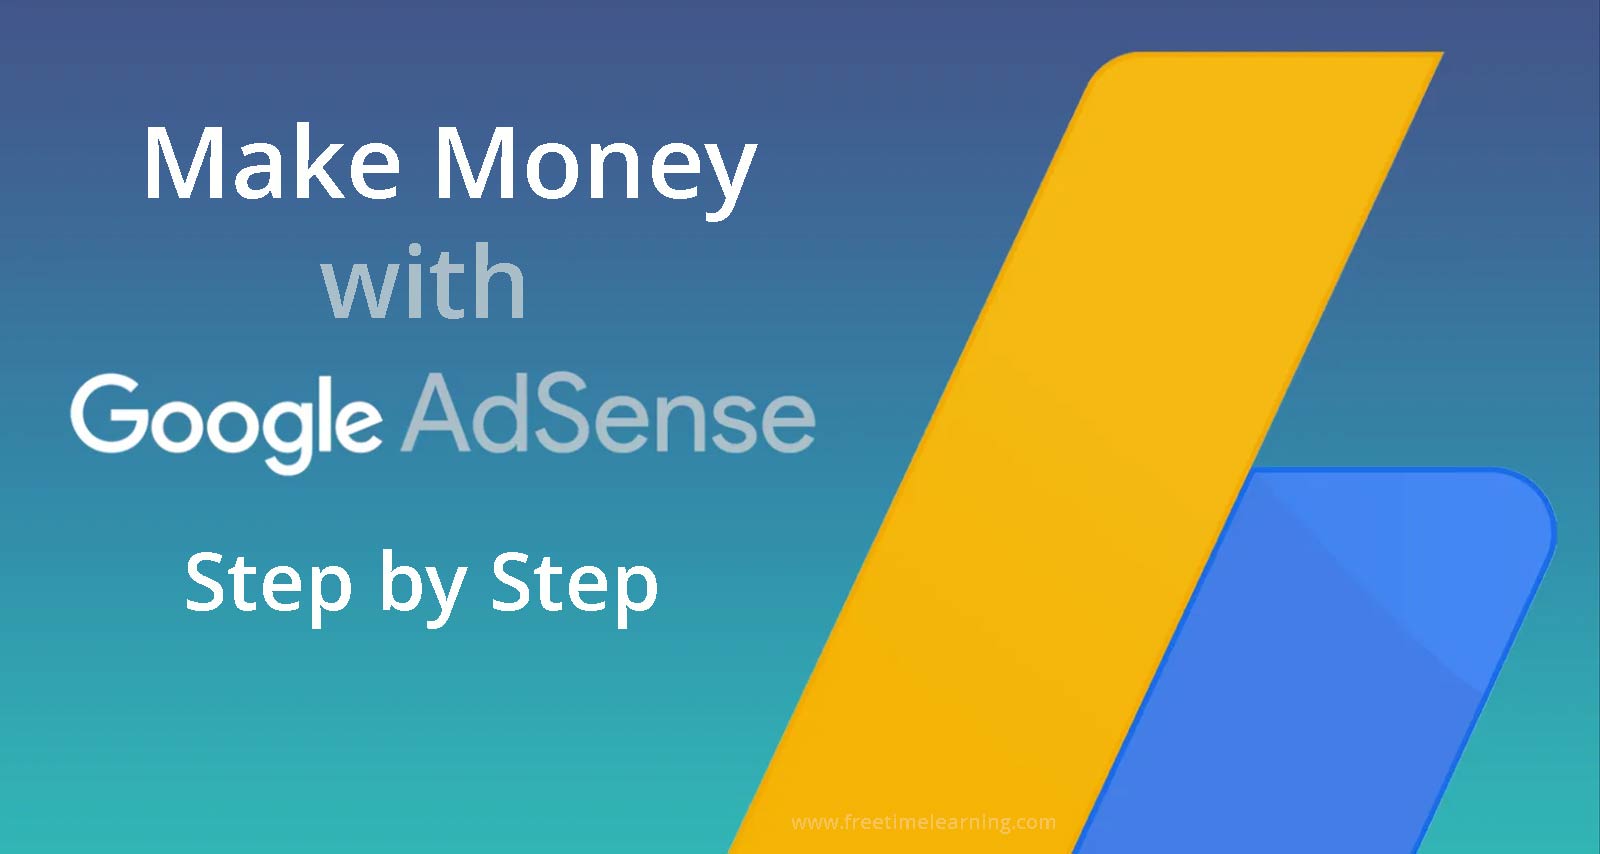 How to Make Money with Google AdSense?